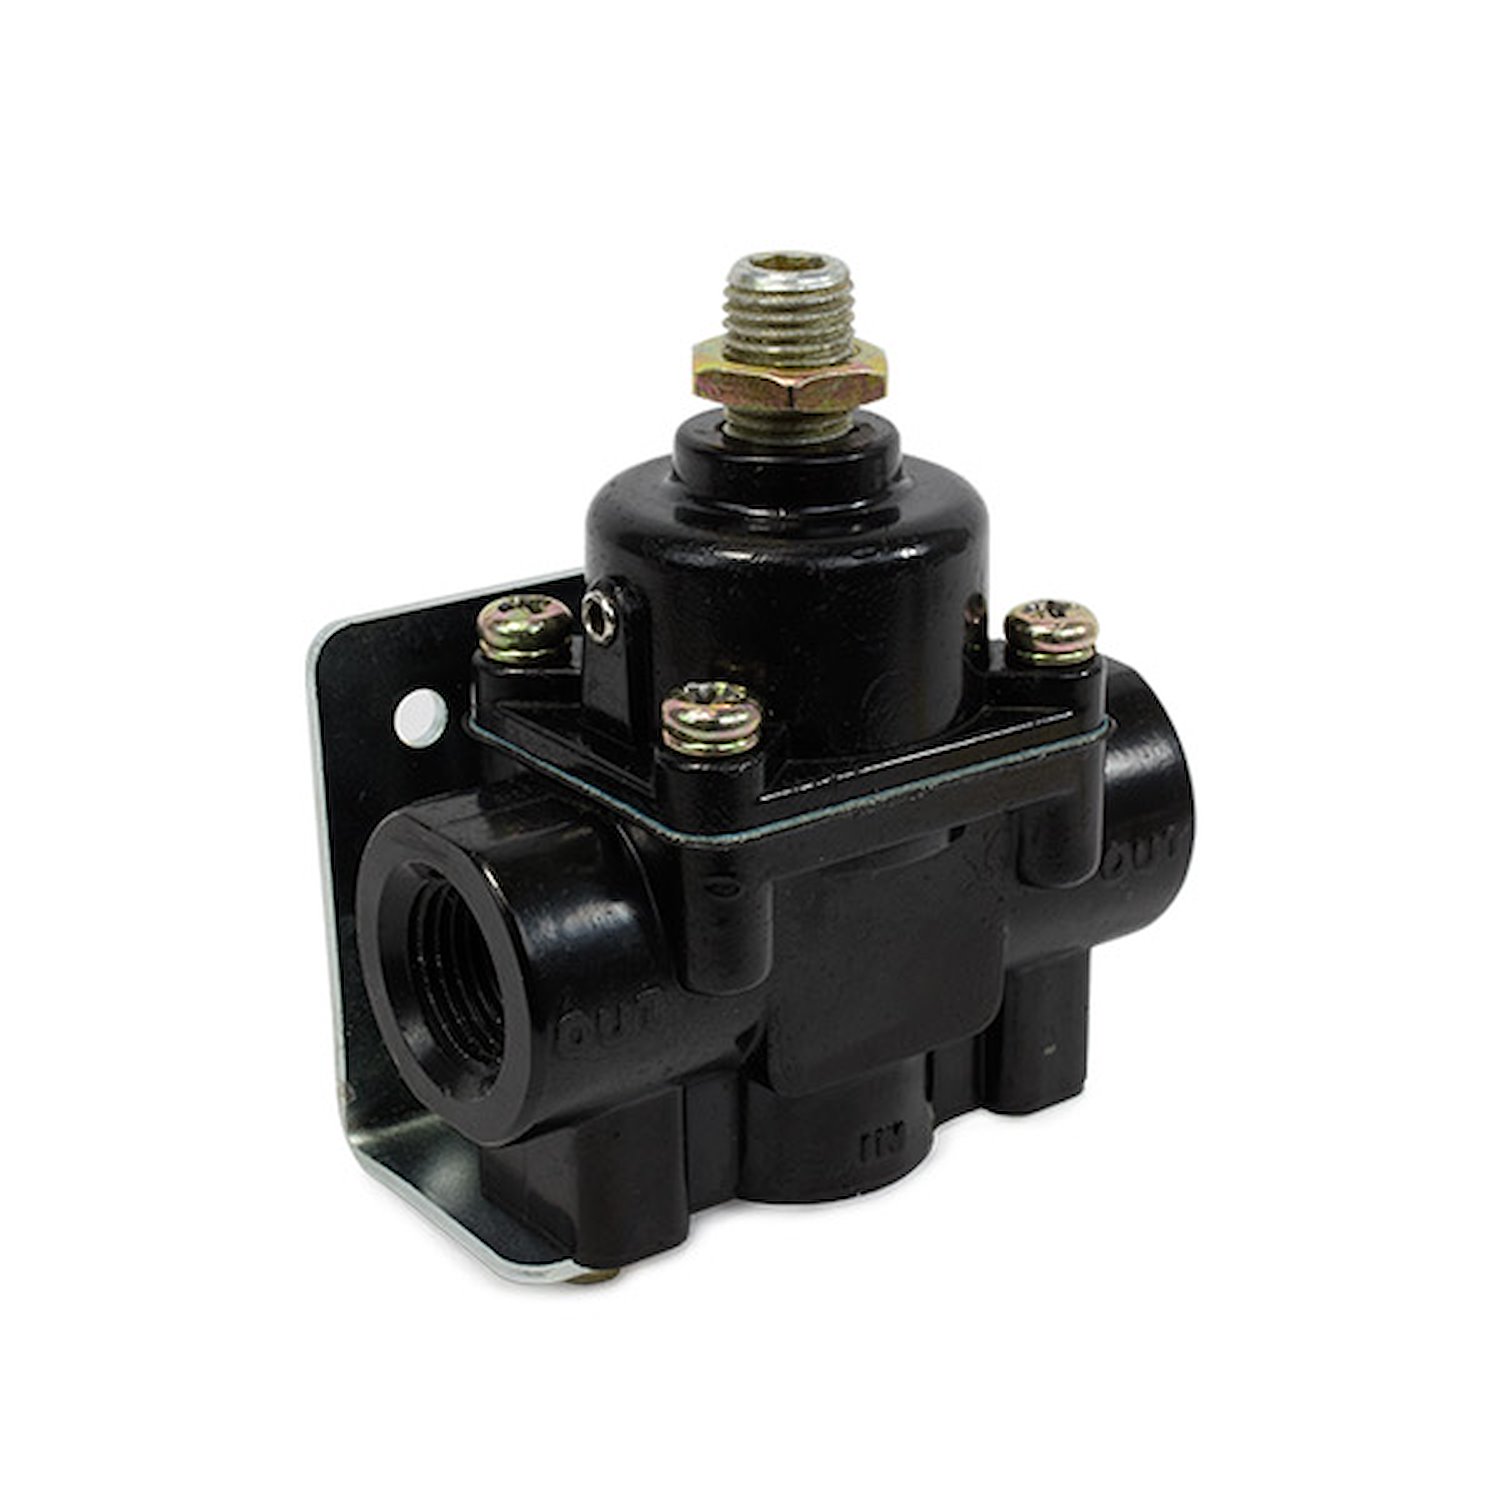 JM1055BK Fuel Pressure Regulator, 1-4 PSI, Black